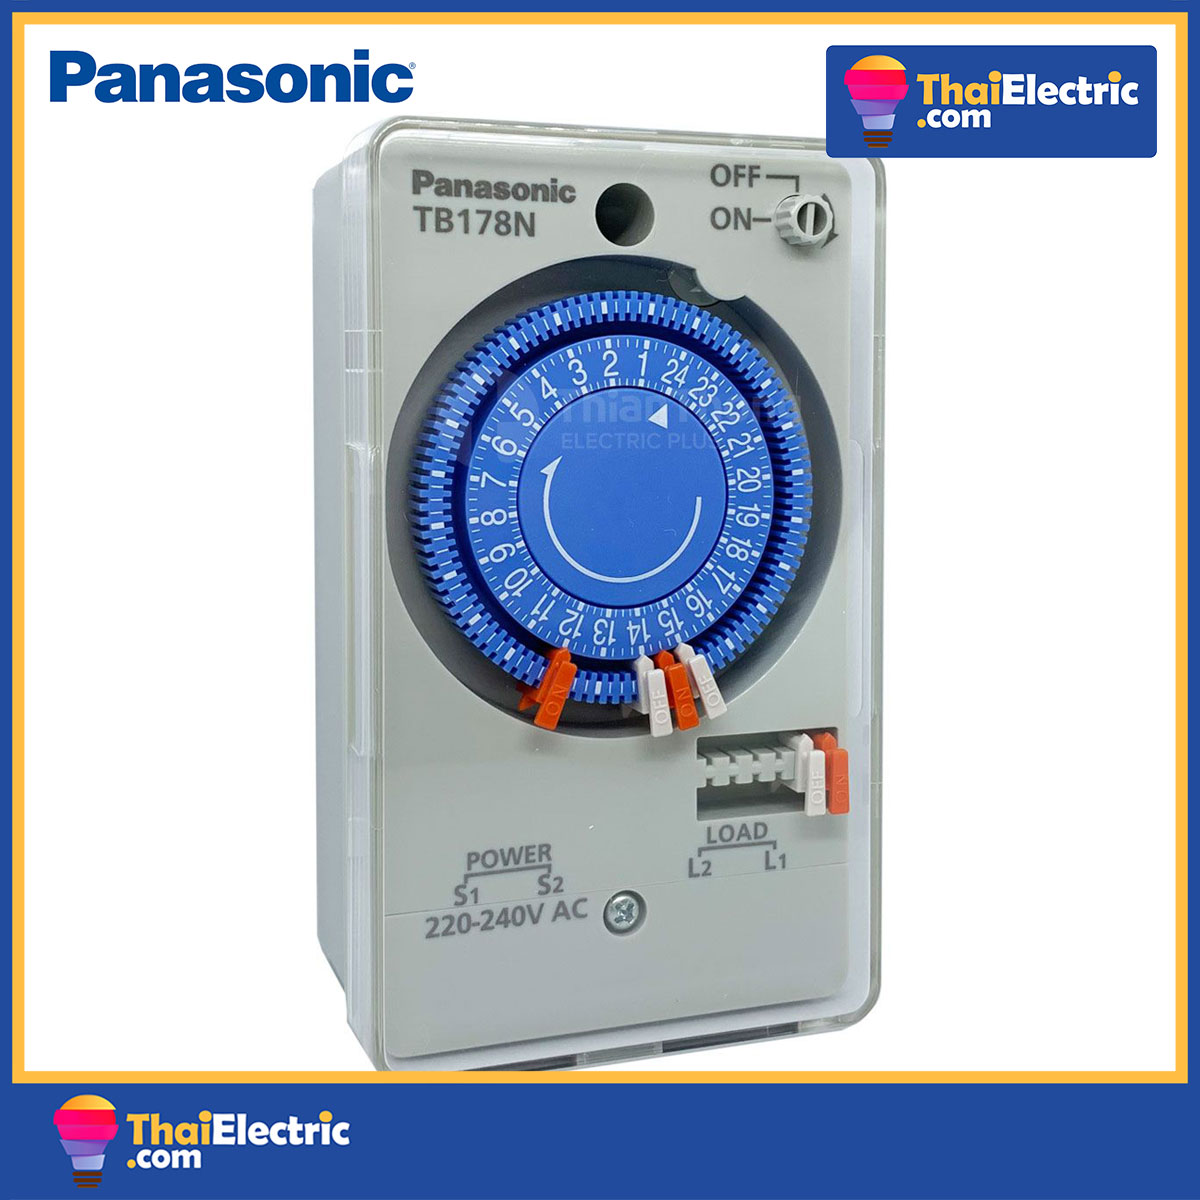 T Con Panasonic ราคาถูก ซื้อออนไลน์ที่ - เม.ย. 2022 | Lazada.co.th